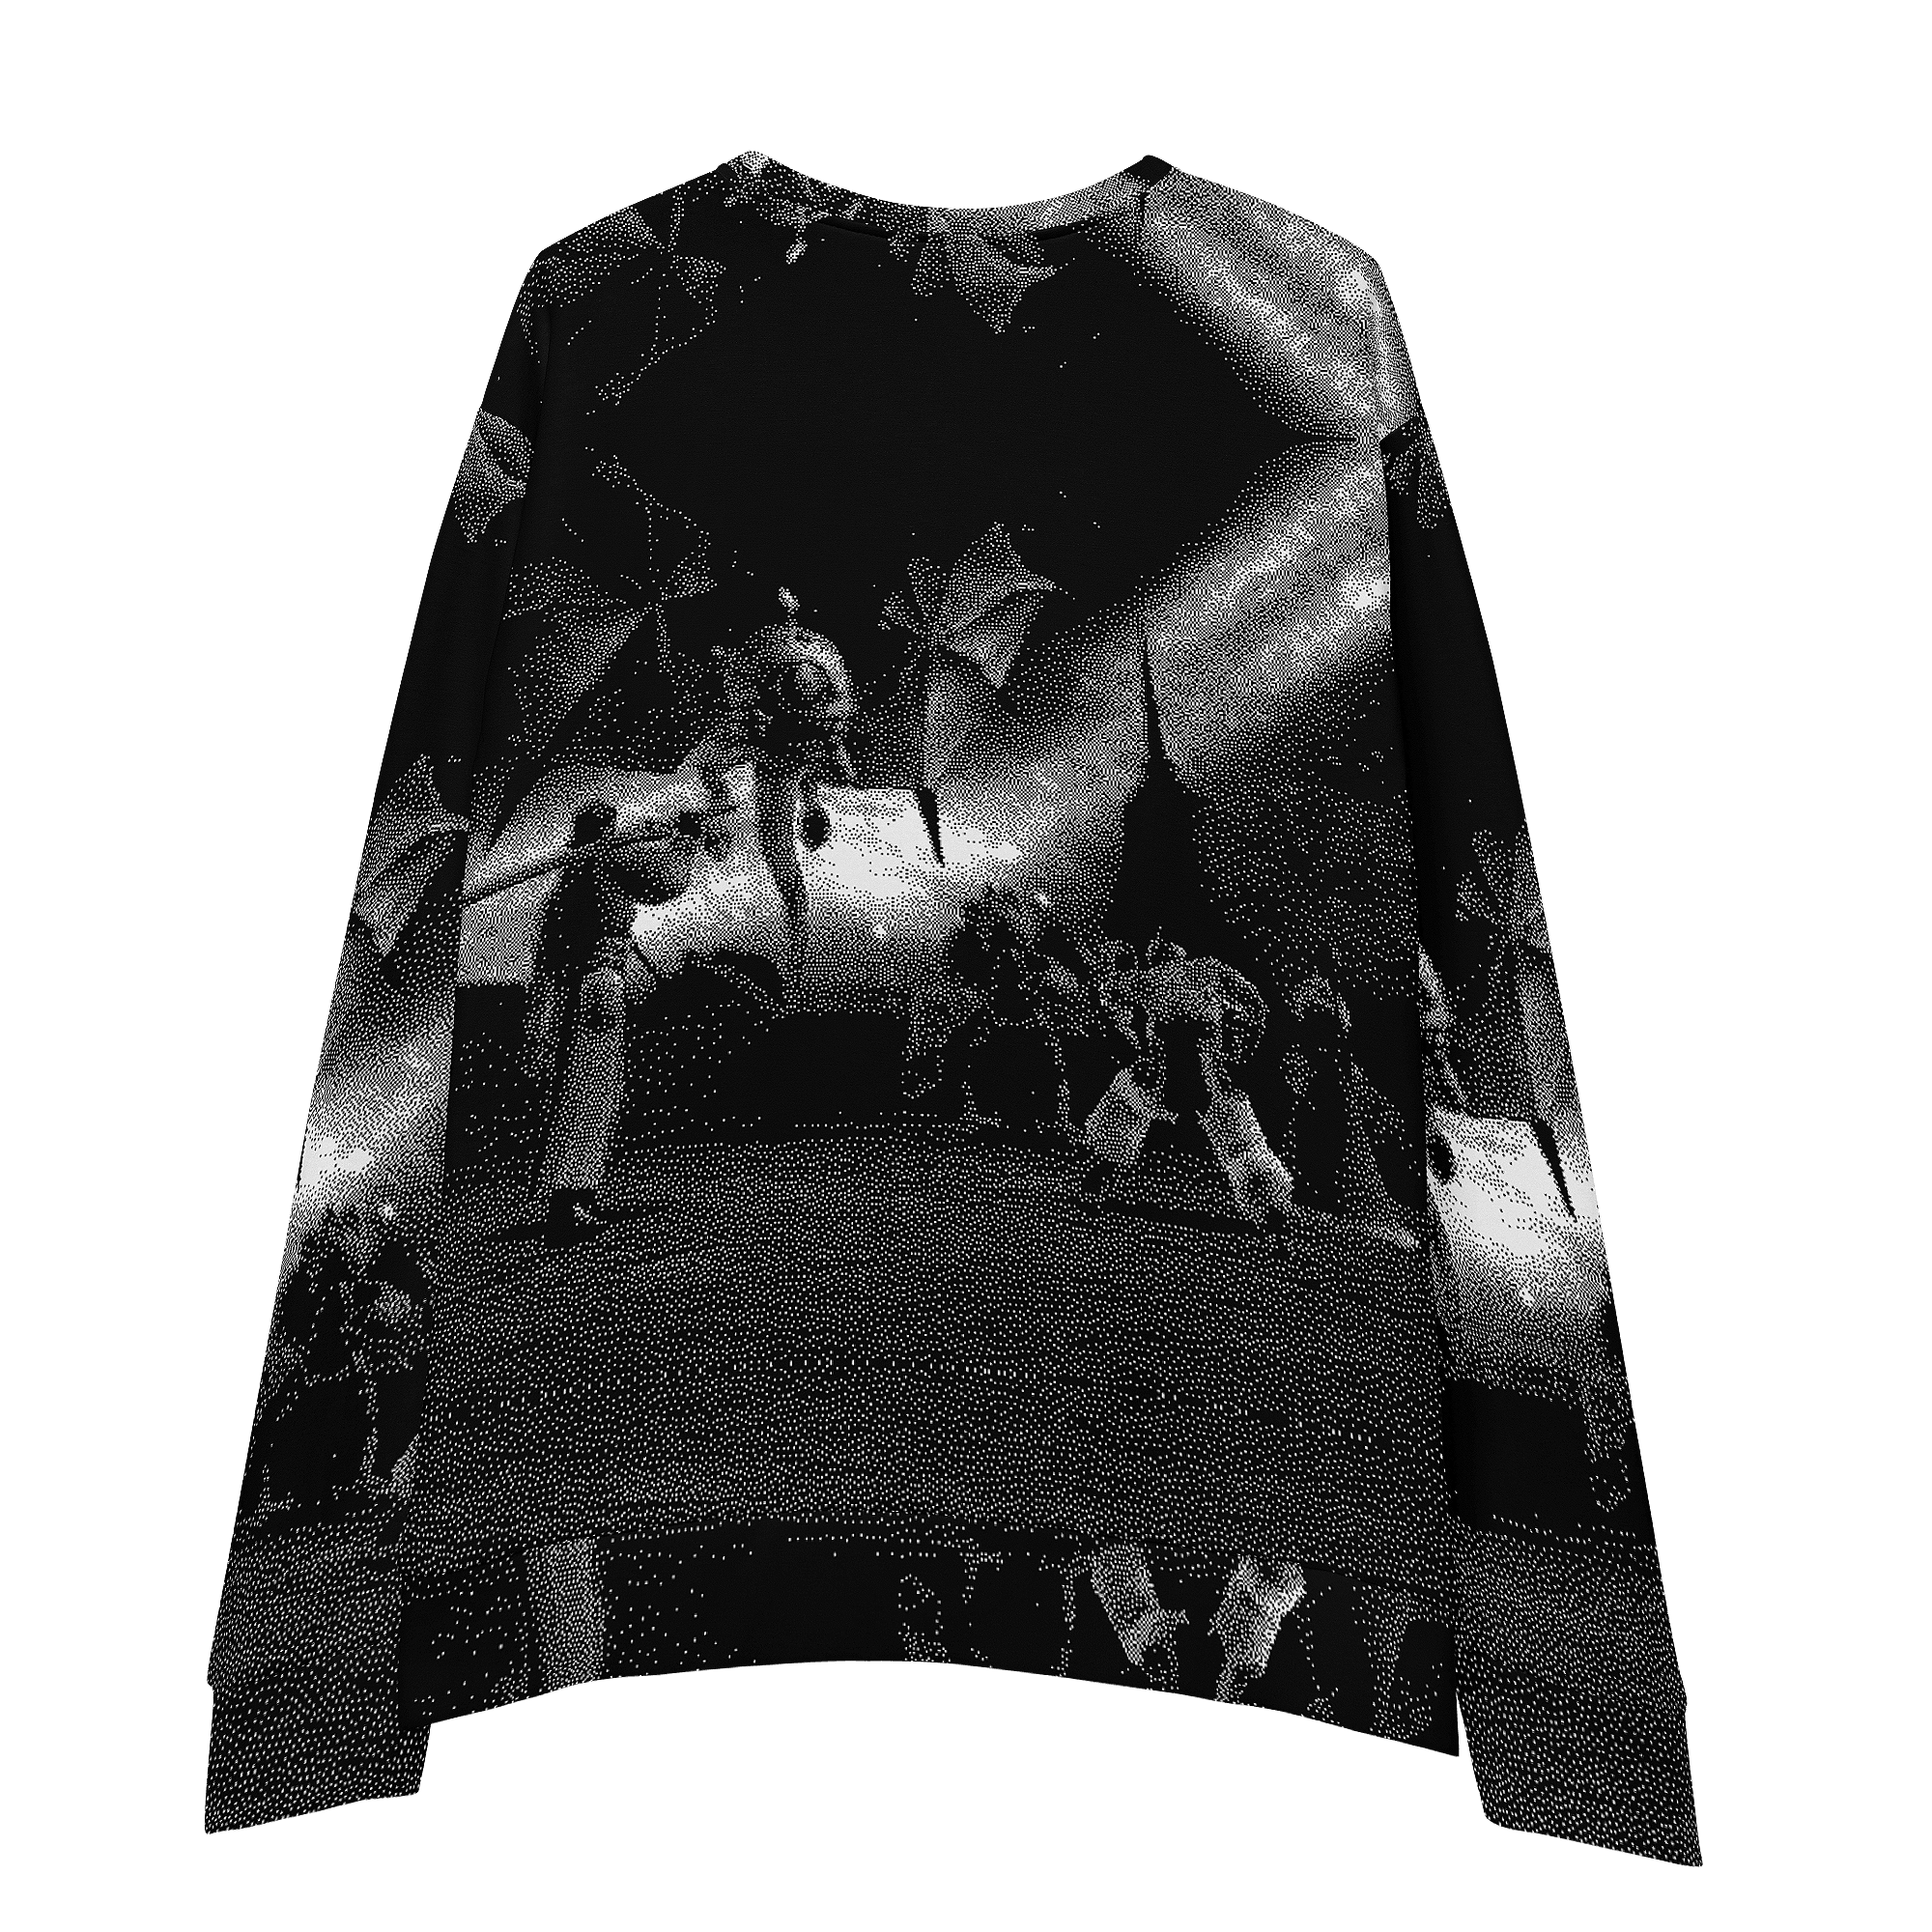 TEAM WORK® Unisex Sweatshirt (7 pieces for sale) - Kikillo Club